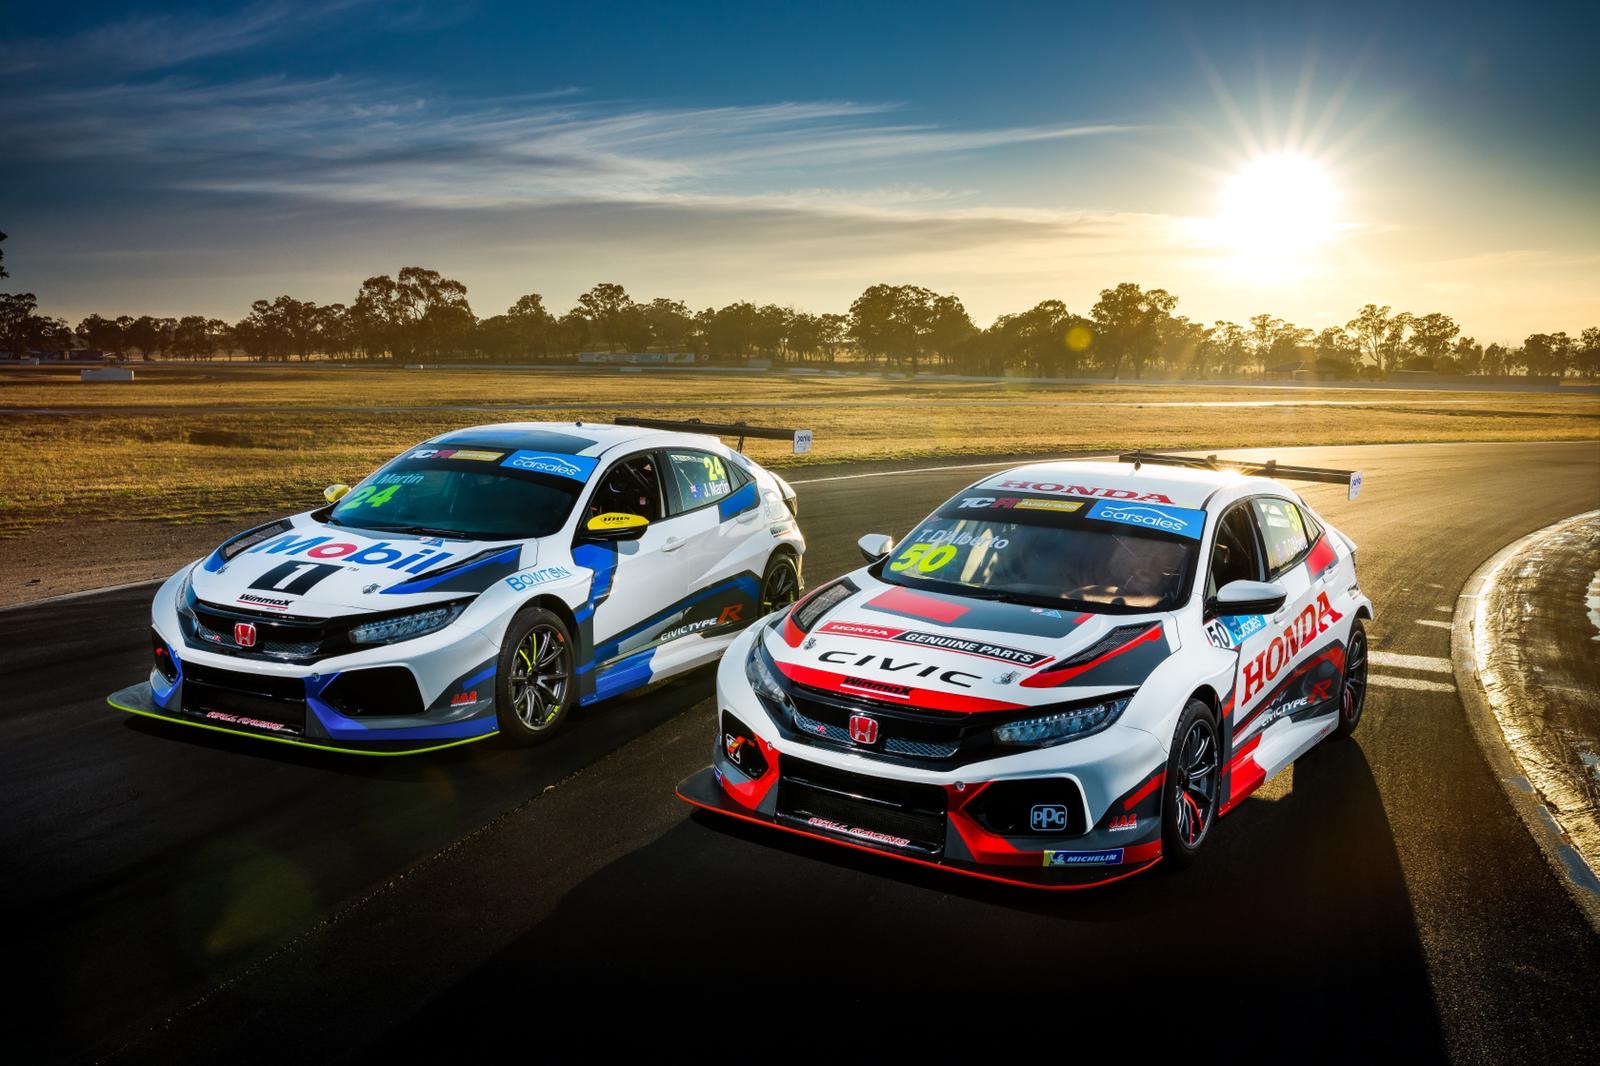 Wall Racing to run two cars in the TCR Australia SimRacing Series